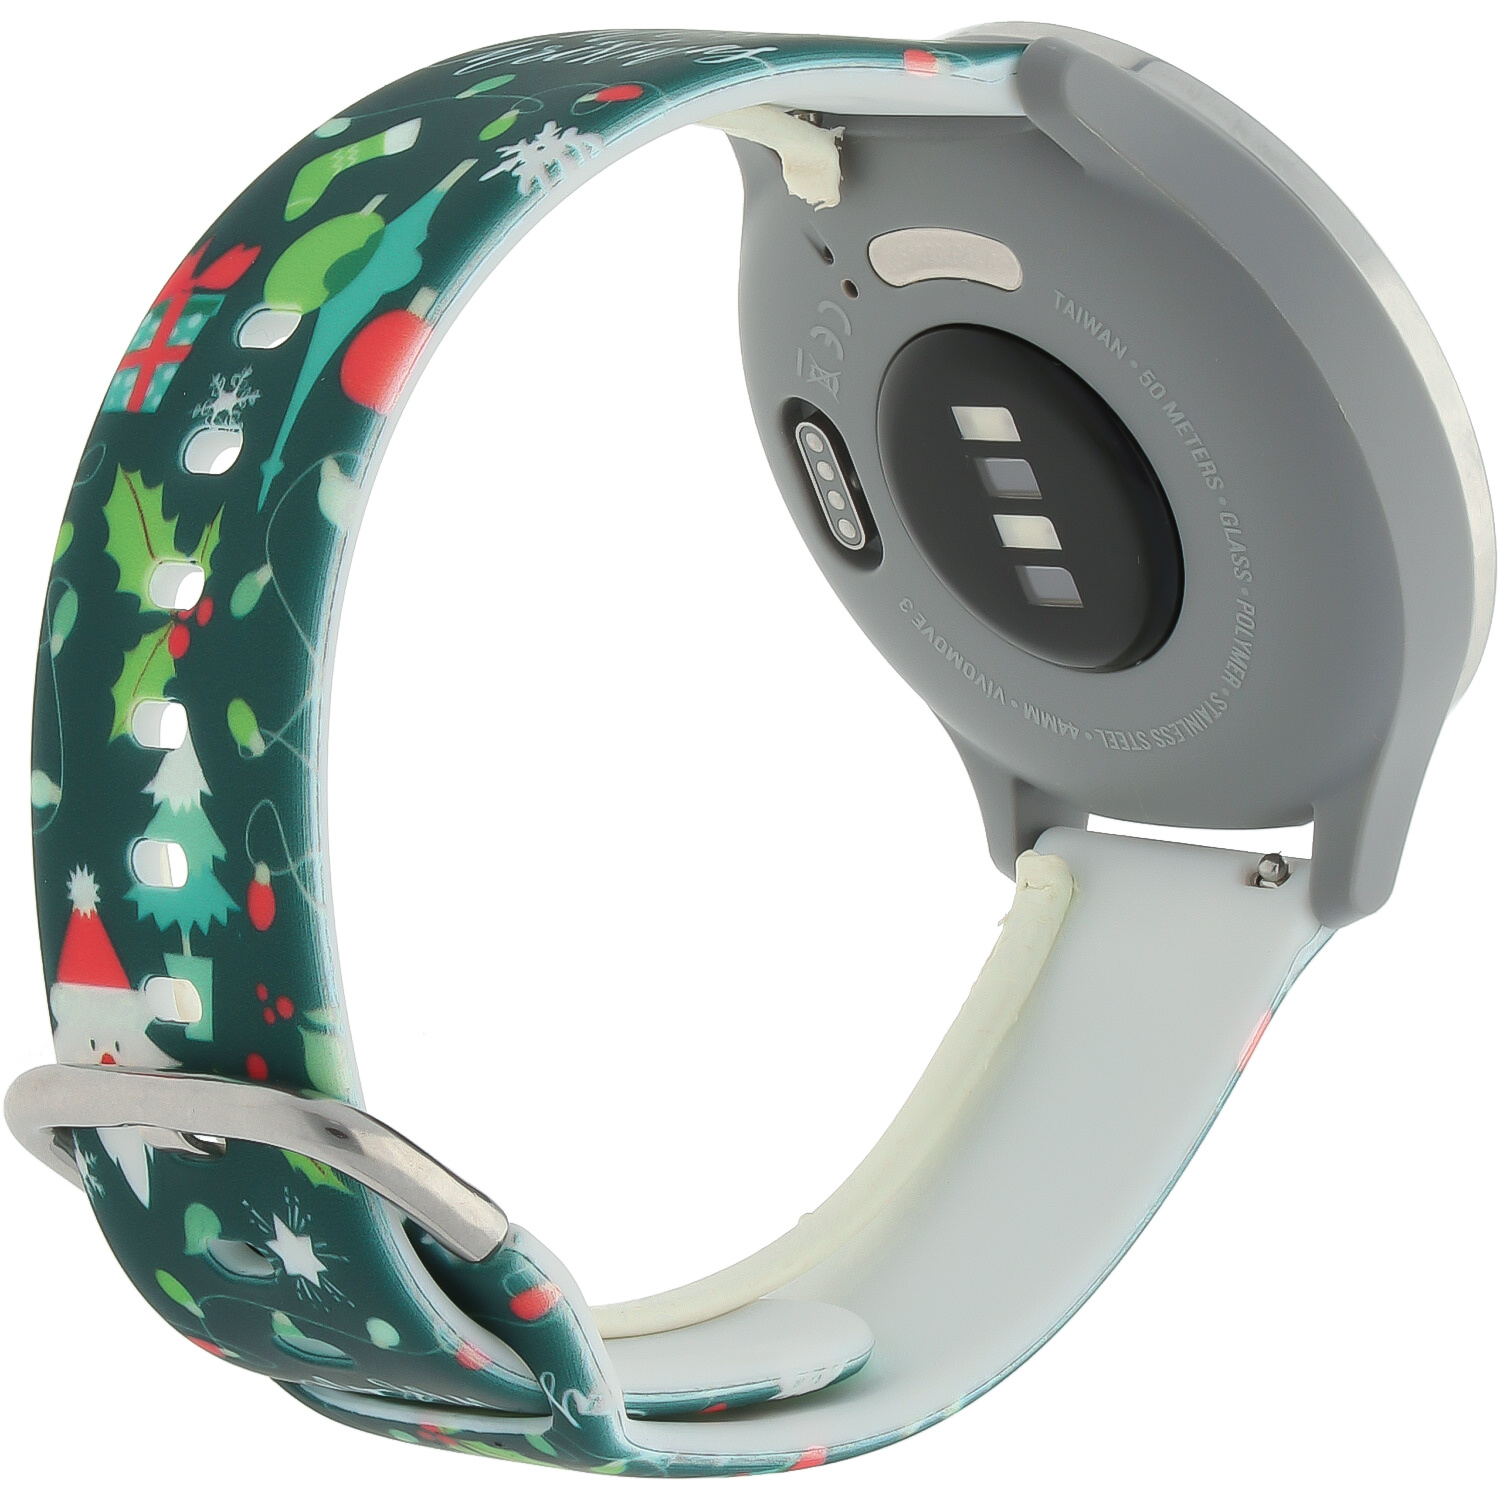 Samsung Galaxy Watch druck Sportarmband - Weihnachten dunkelgrün